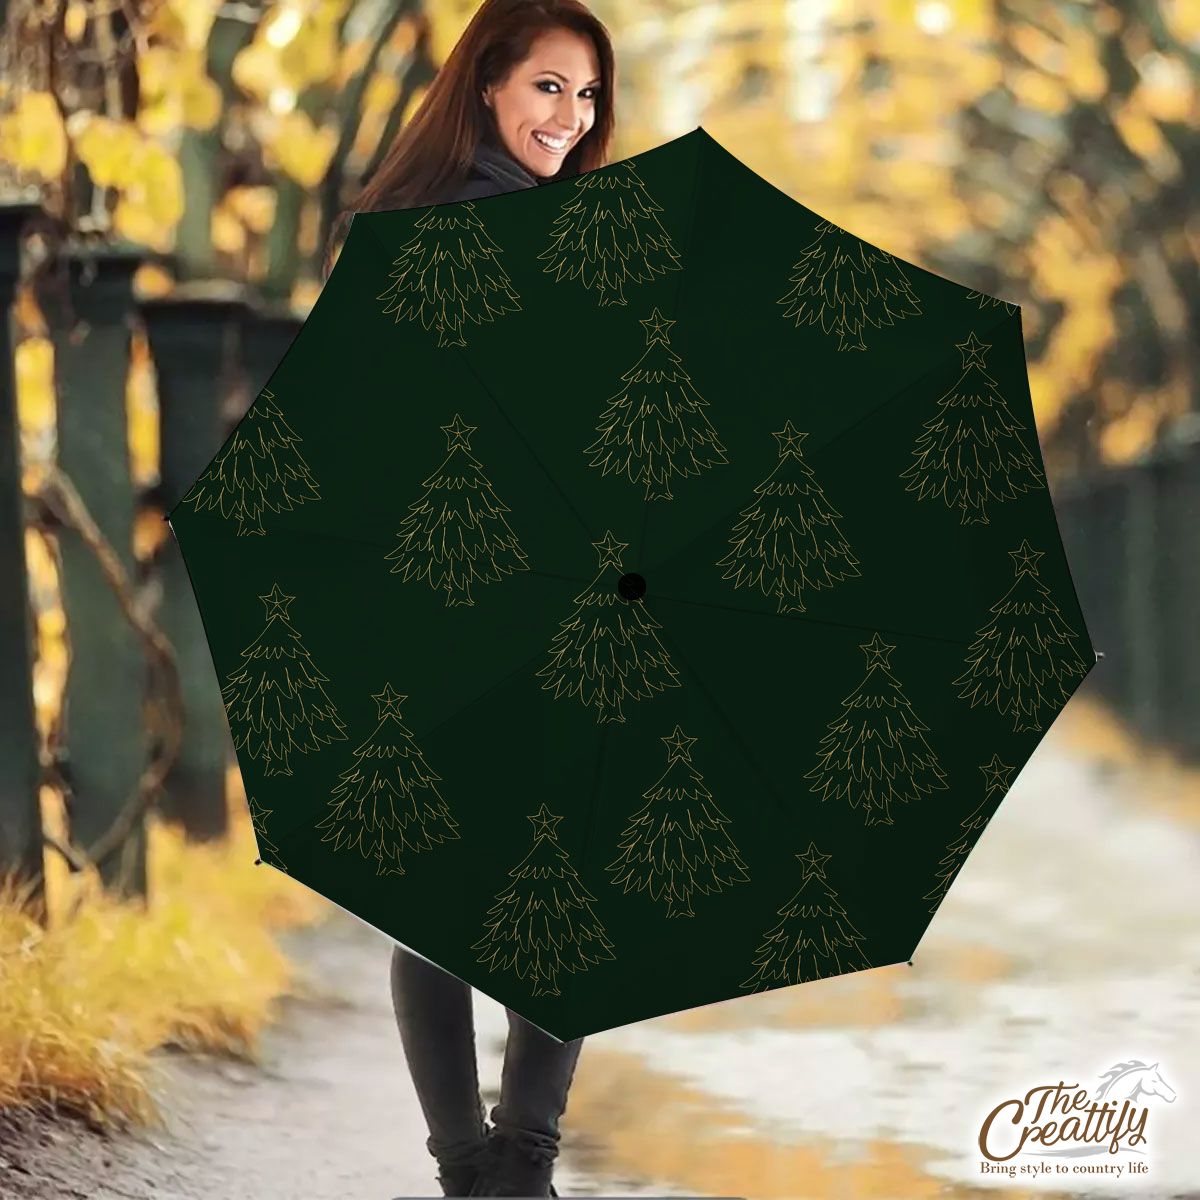 Gold And Green Christmas Tree Umbrella